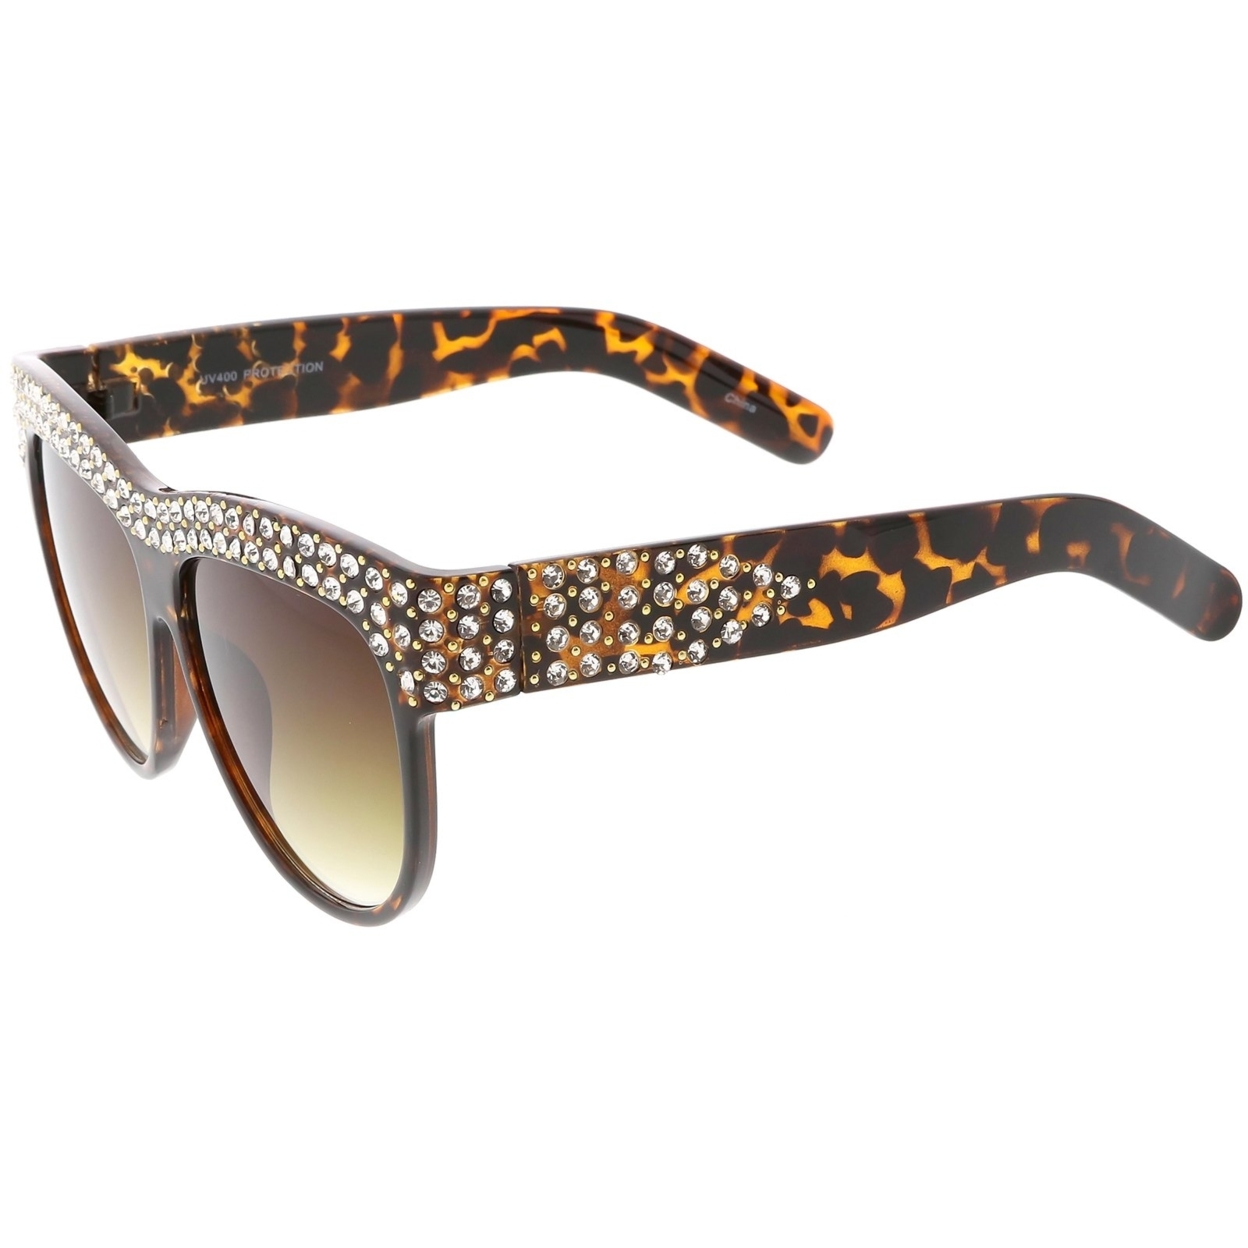 Handcrafted Rhinestone Stud Embellished Oversize Sunglasses Round Flat Lens 57mm - Tortoise / Amber